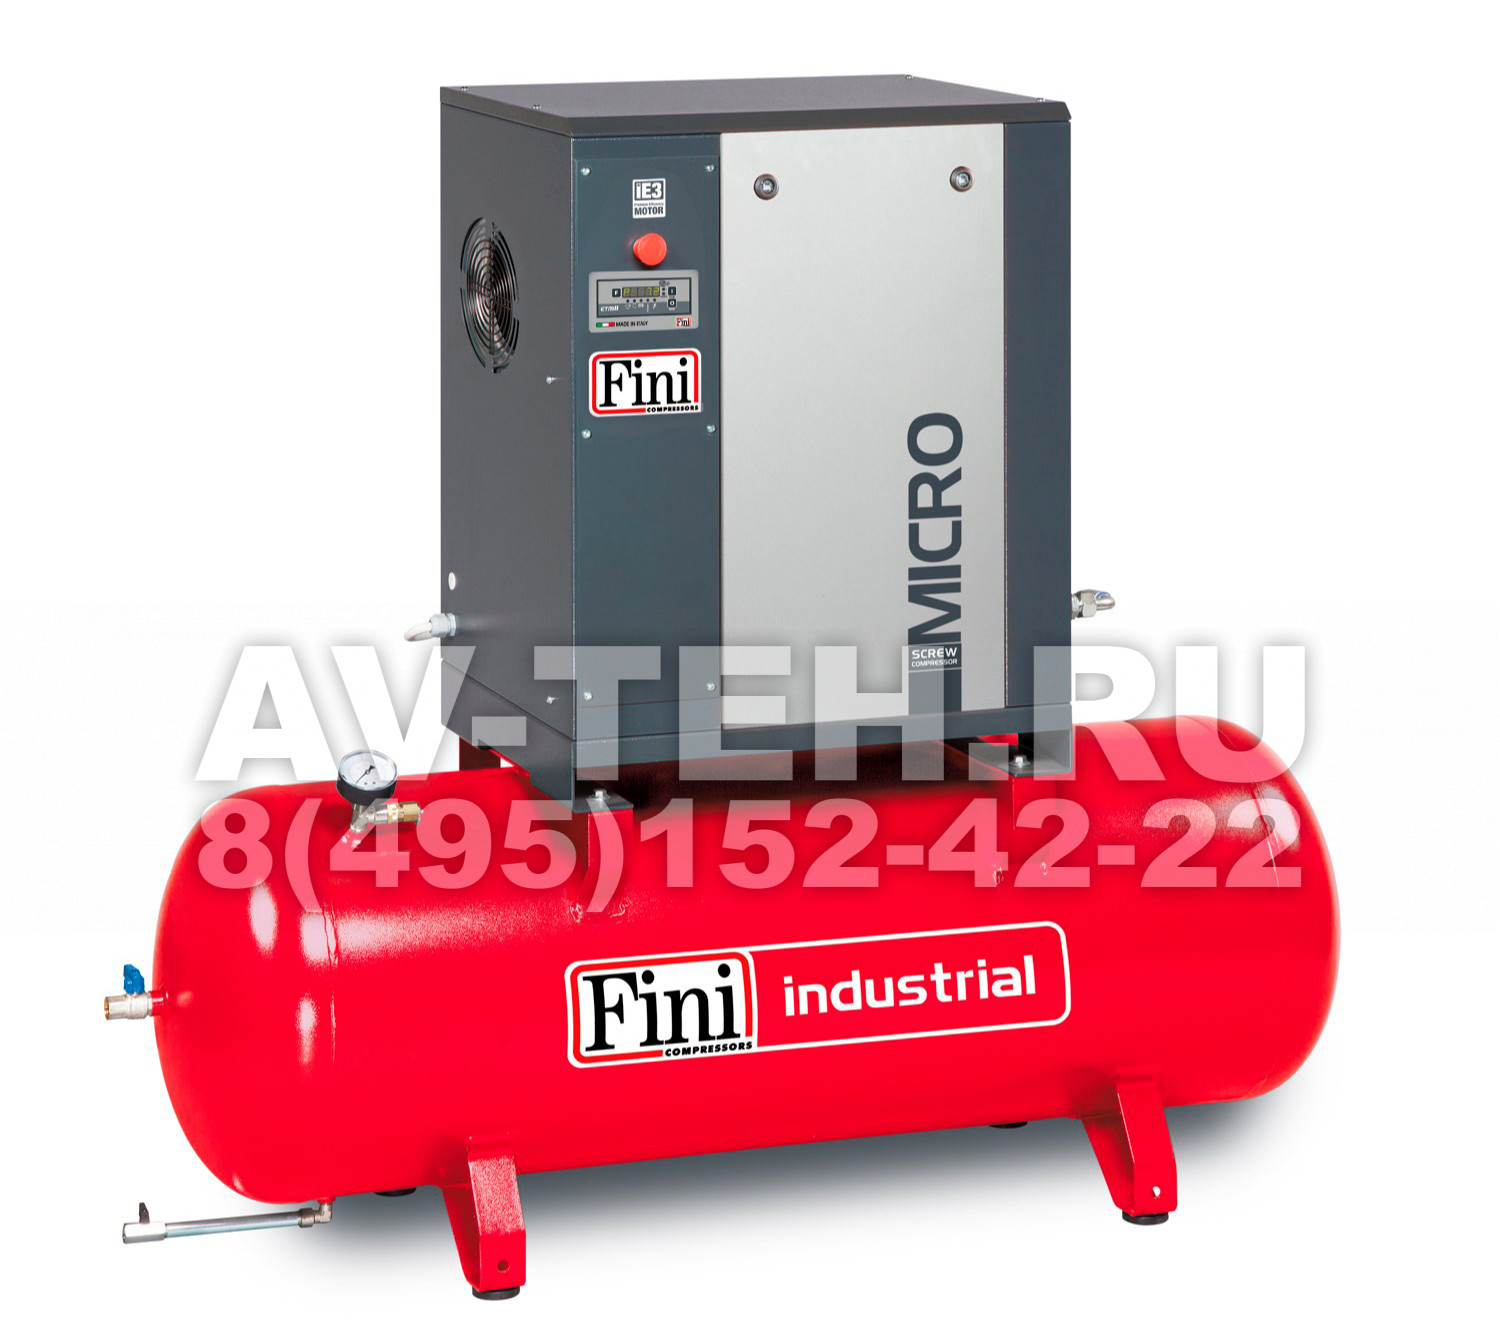 Винтовой компрессор Fini MICRO 5.5-10-270